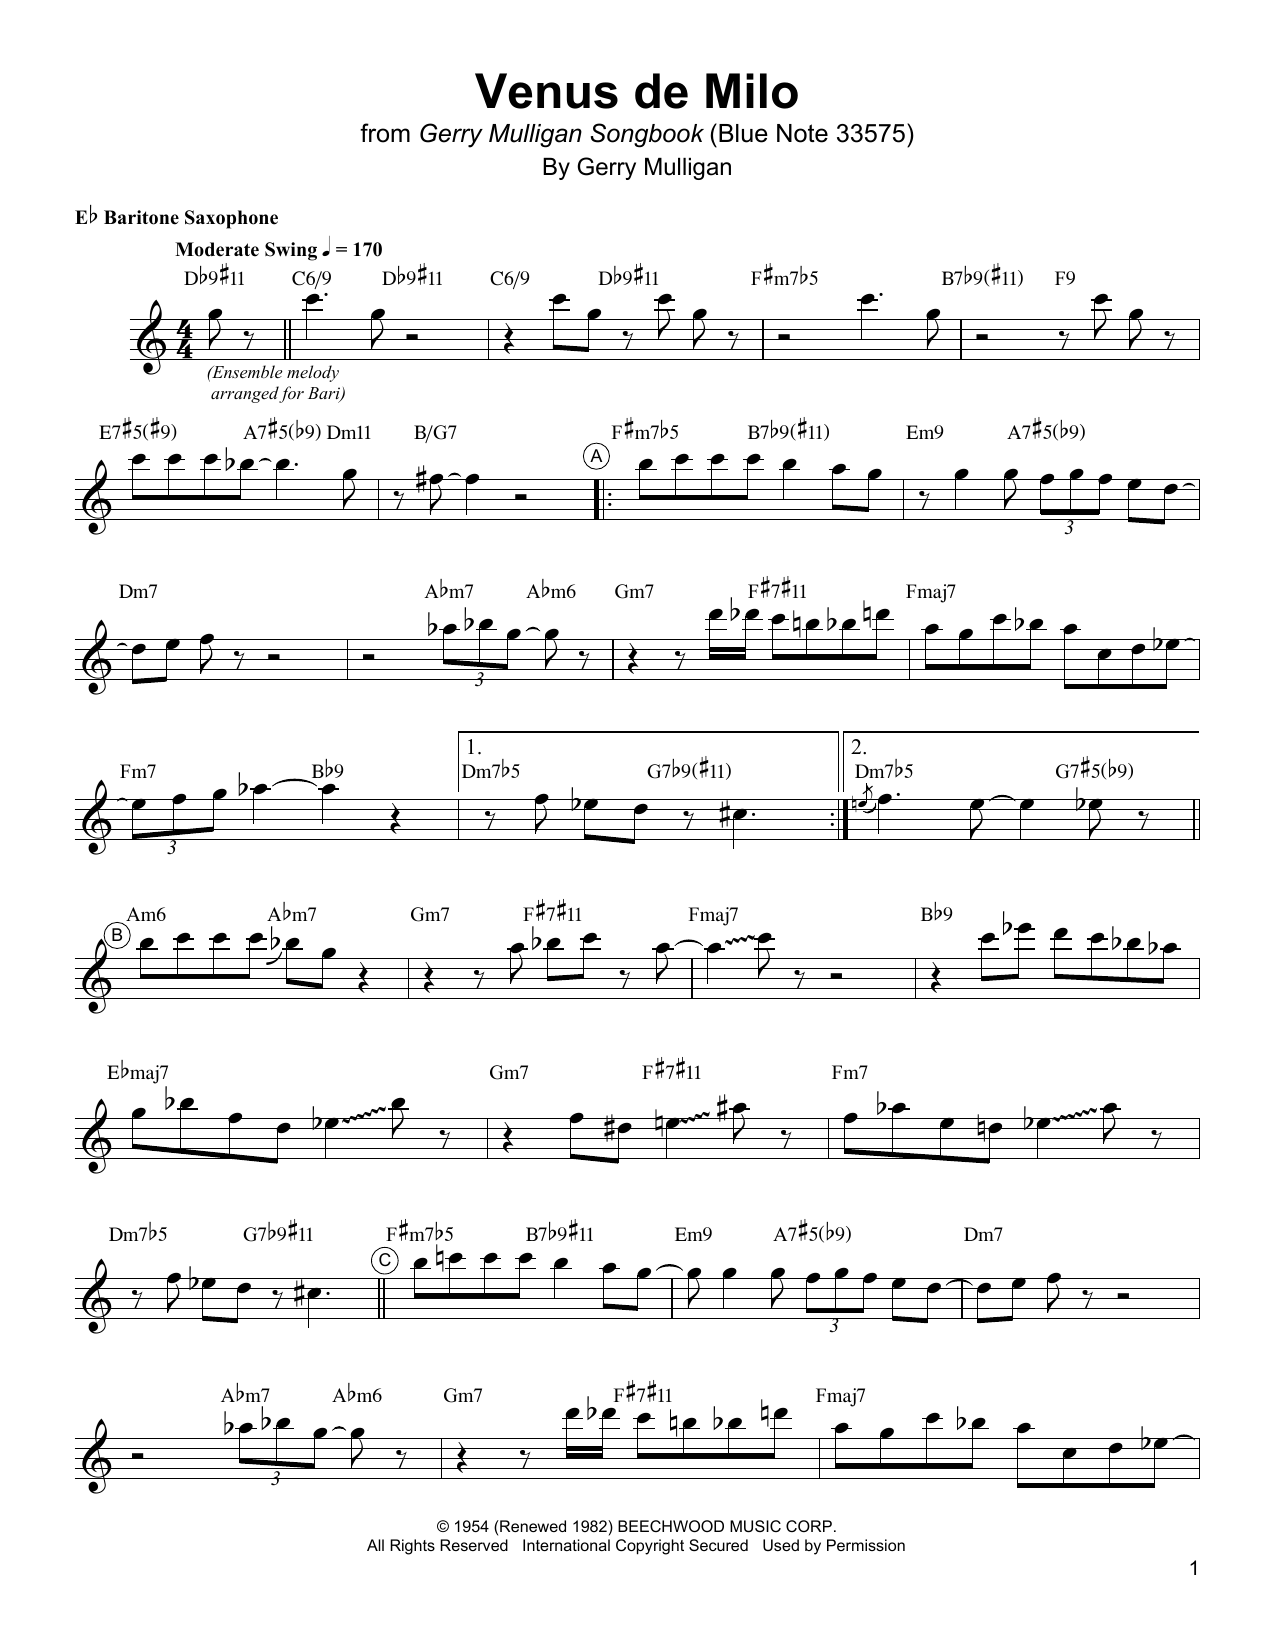 Gerry Mulligan Venus De Milo Sheet Music Notes & Chords for Baritone Sax Transcription - Download or Print PDF